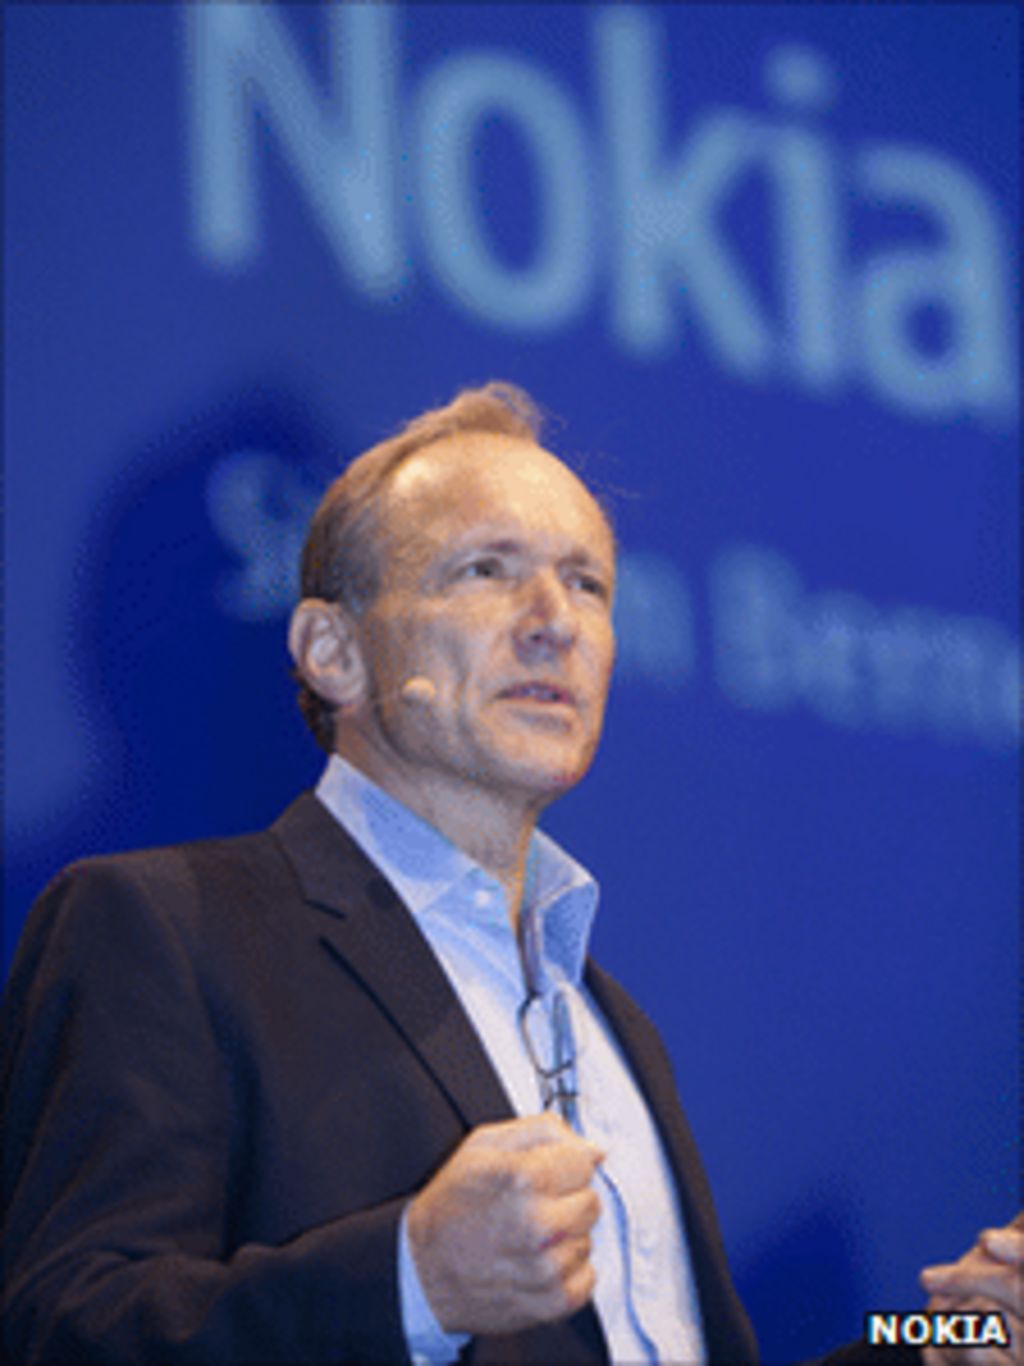 Tim Berners-Lee calls for free internet worldwide - BBC News